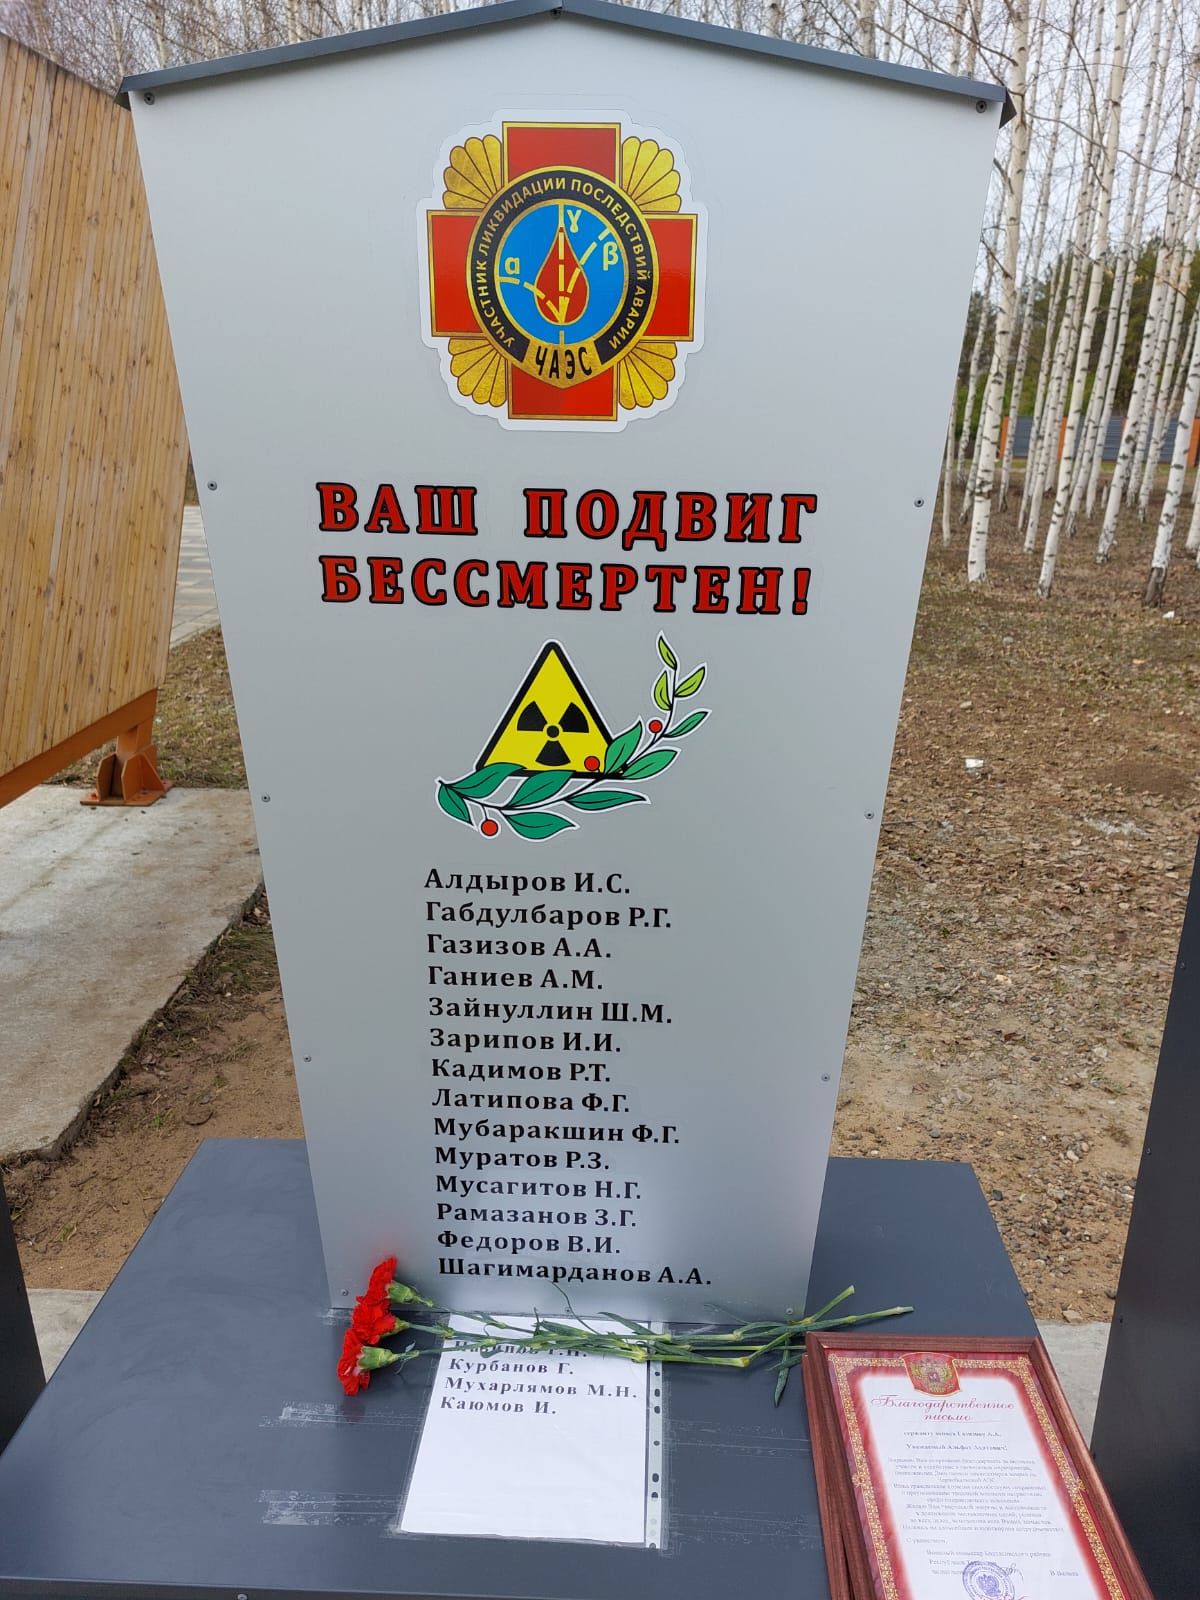 Балтачта  чернобыльче-райондашларыбыз хөрмәтенә һәйкәл ачылды (+фото)